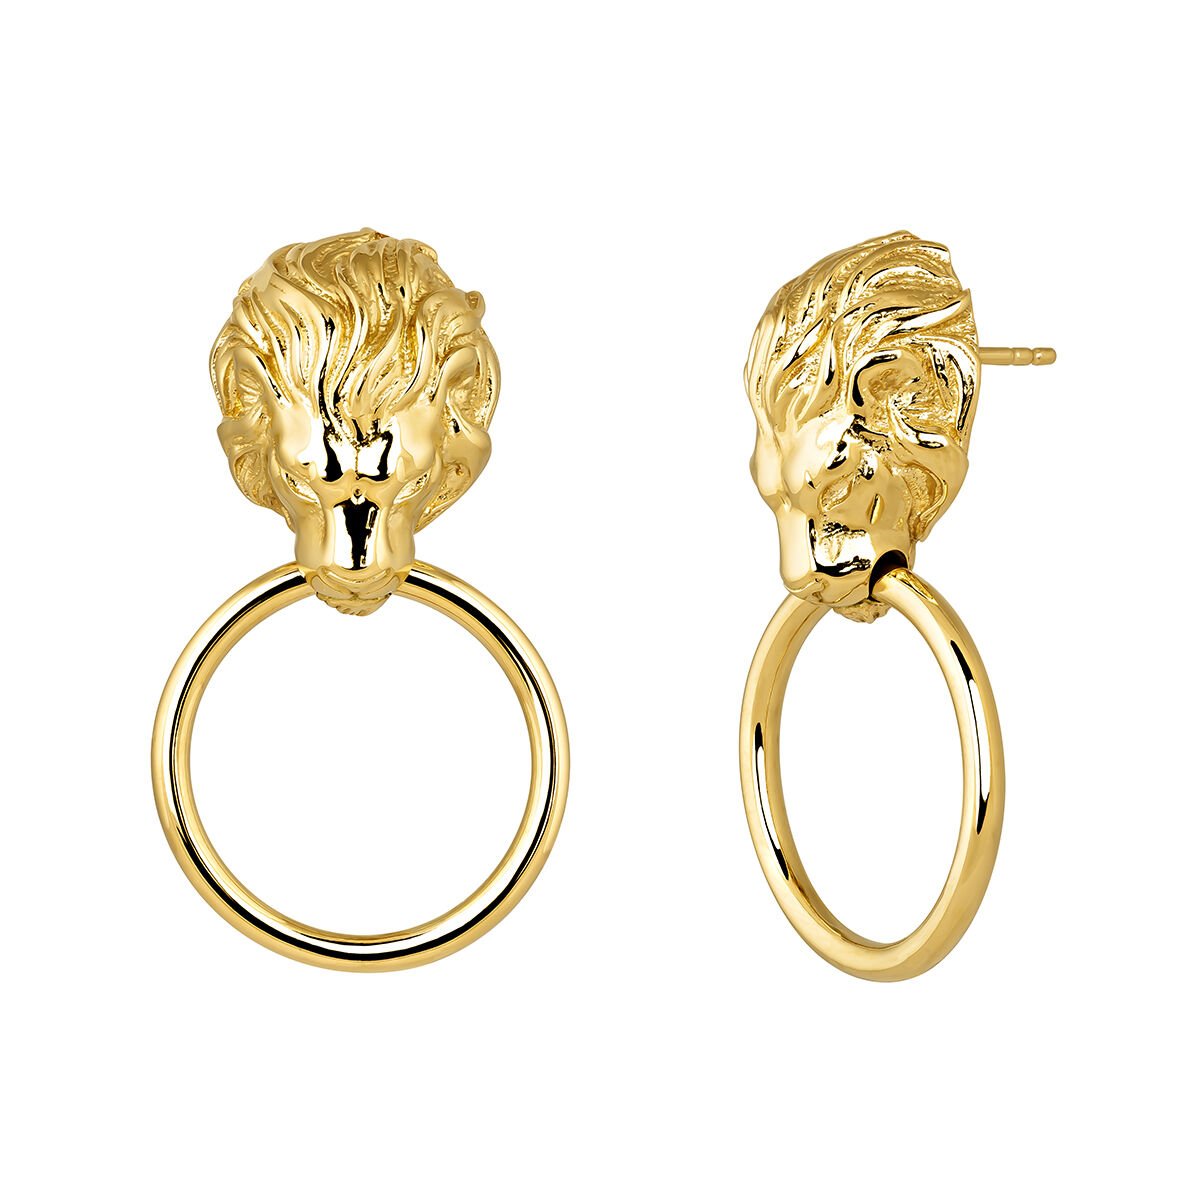 Lion hoop earrings in 18k gold-plated sterling silver, J04238-02, mainproduct